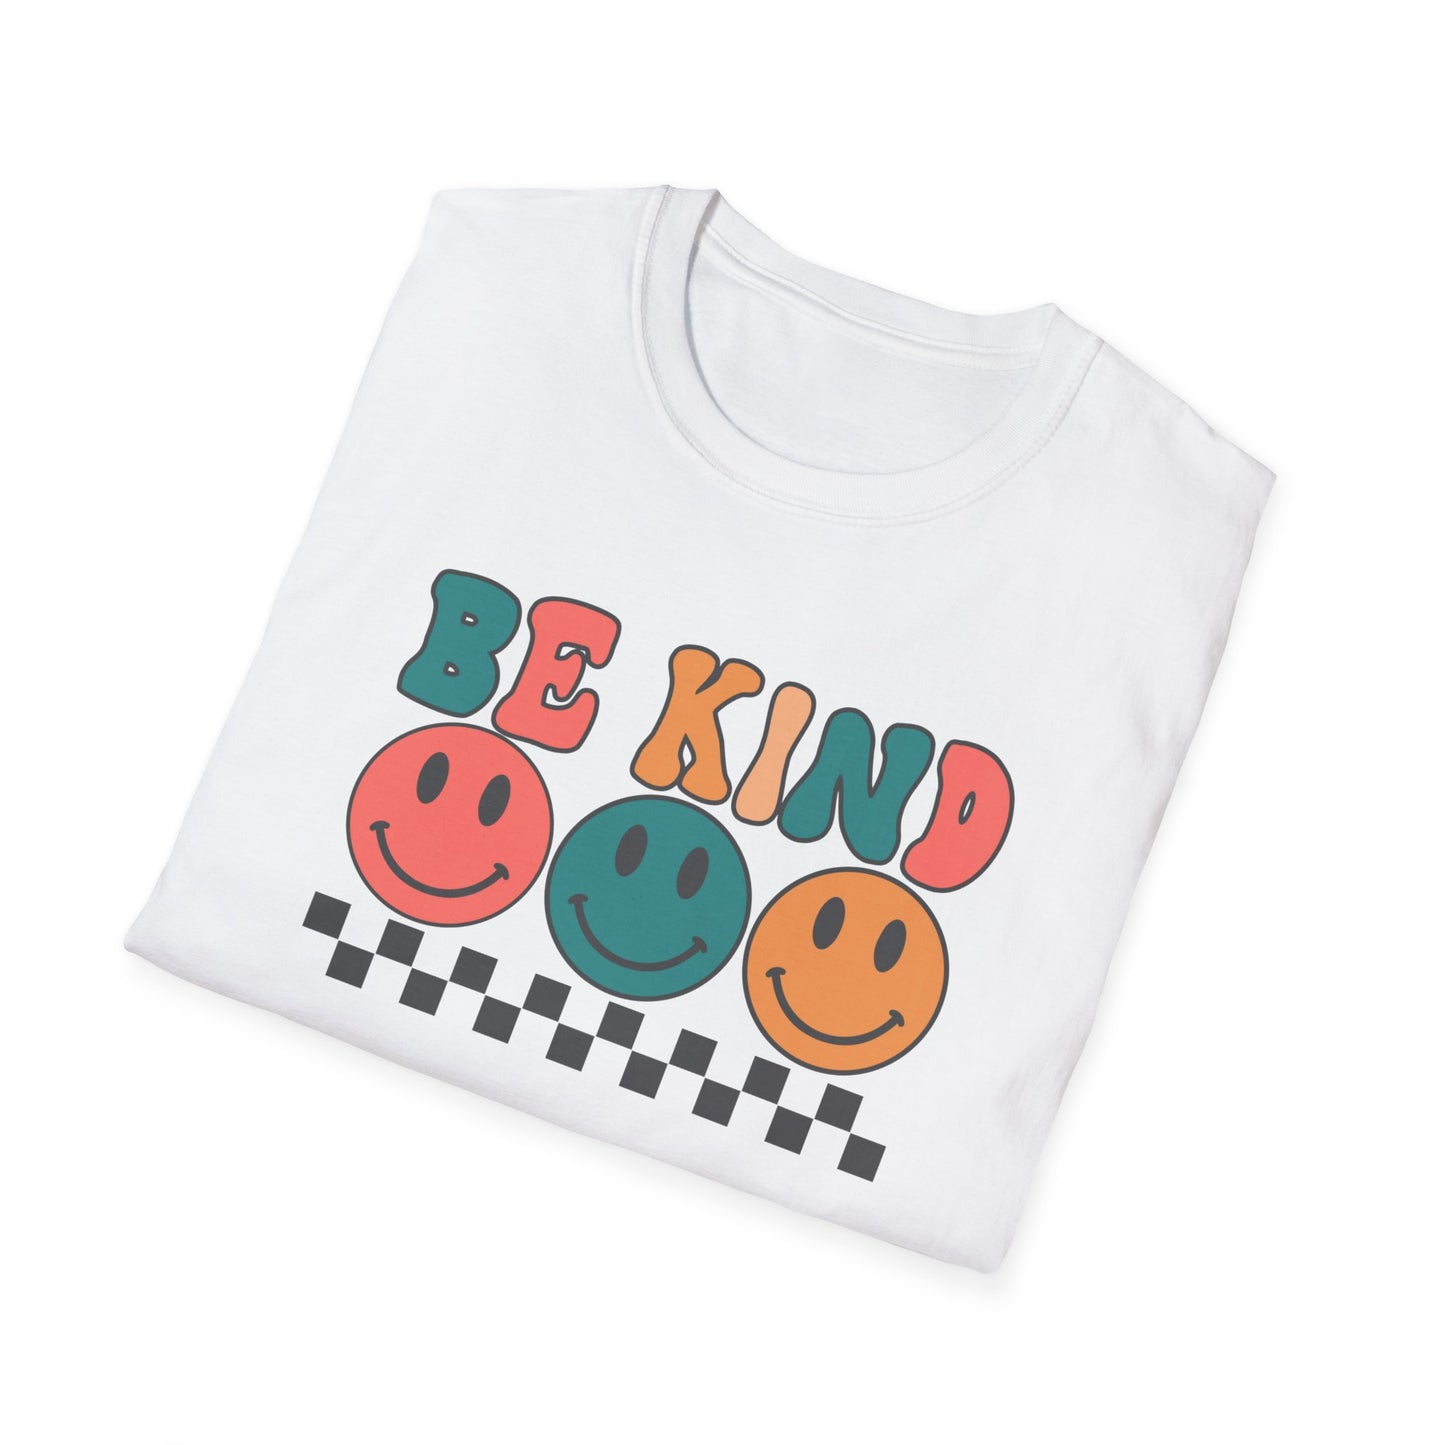 Be KIND - Unisex Softstyle T-Shirt